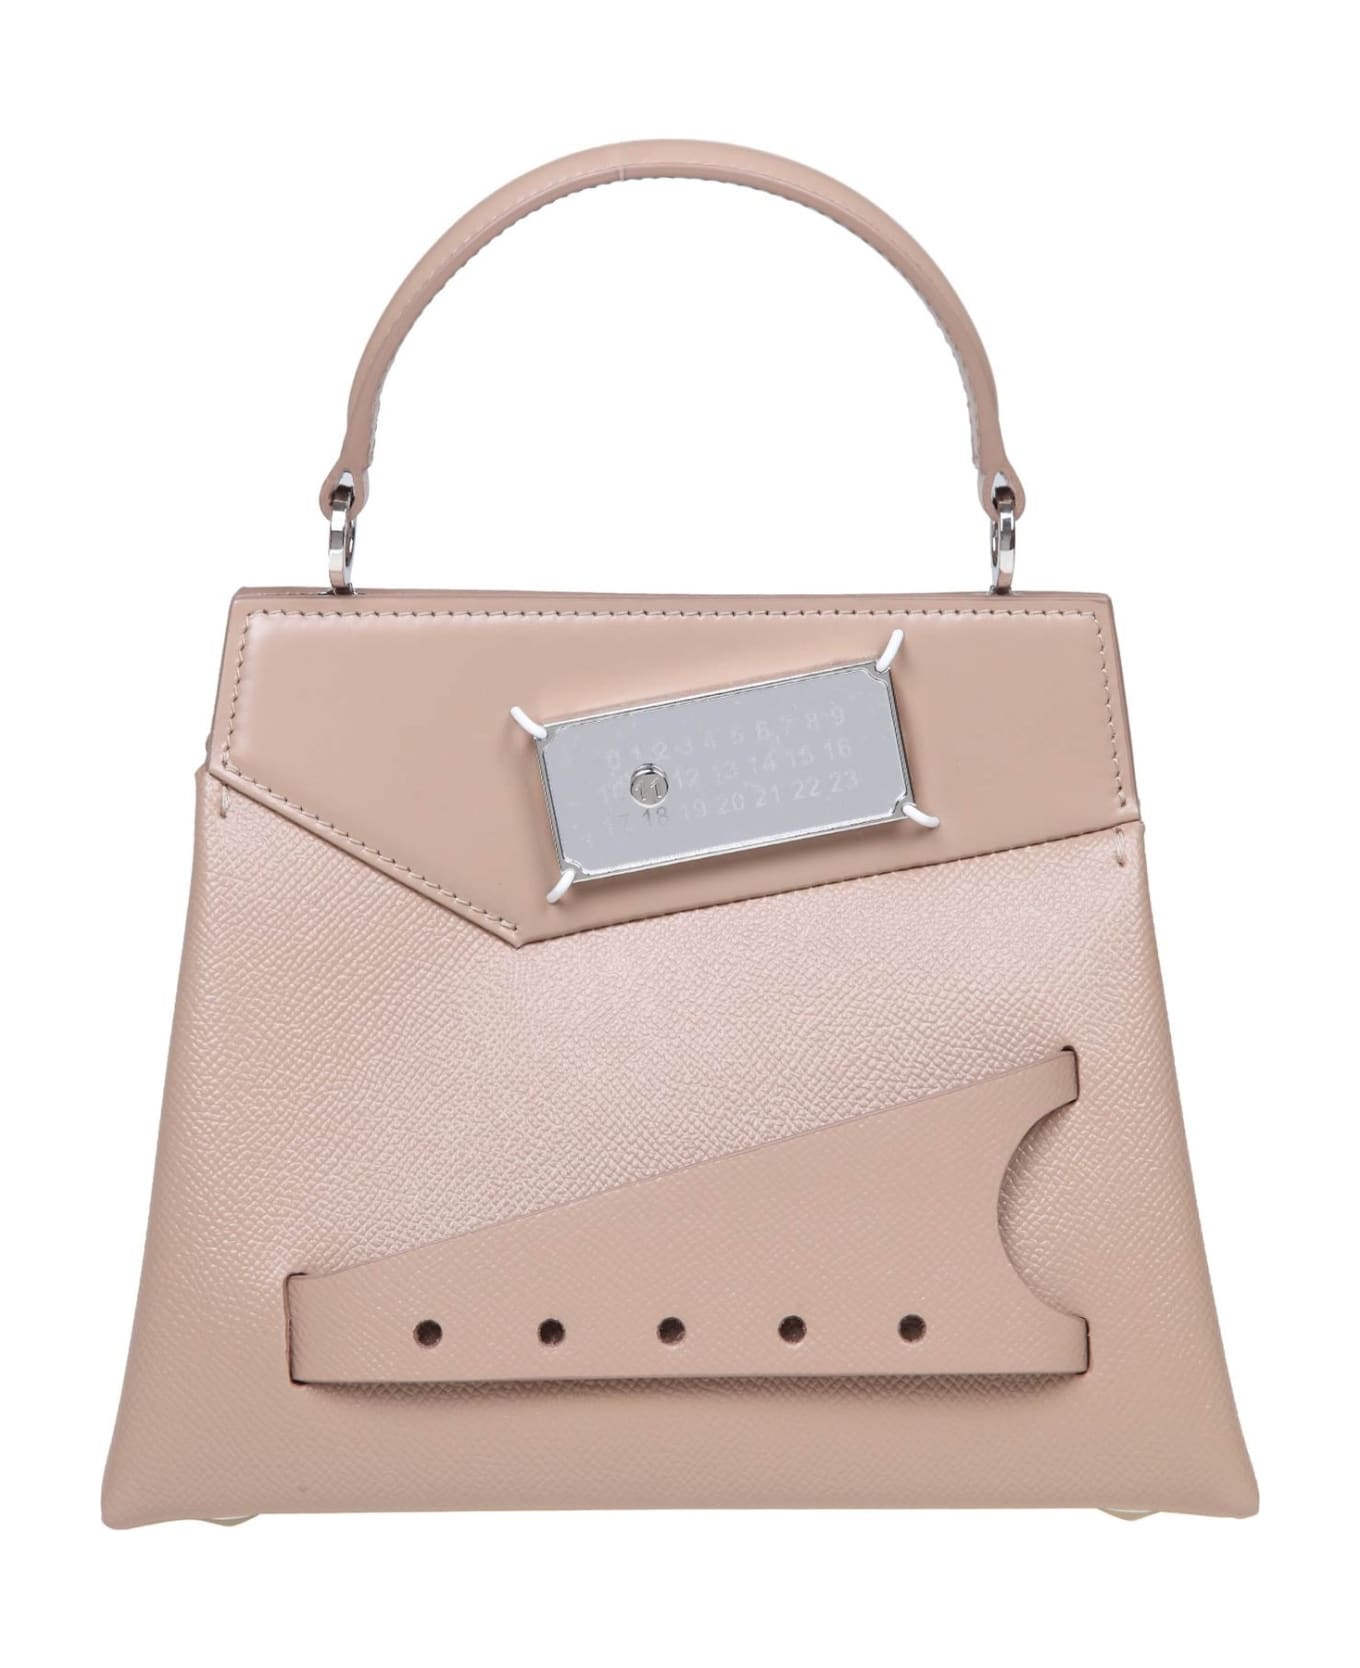 Maison Margiela Small Snatched Handbag In Beige Leather - BEIGE トートバッグ